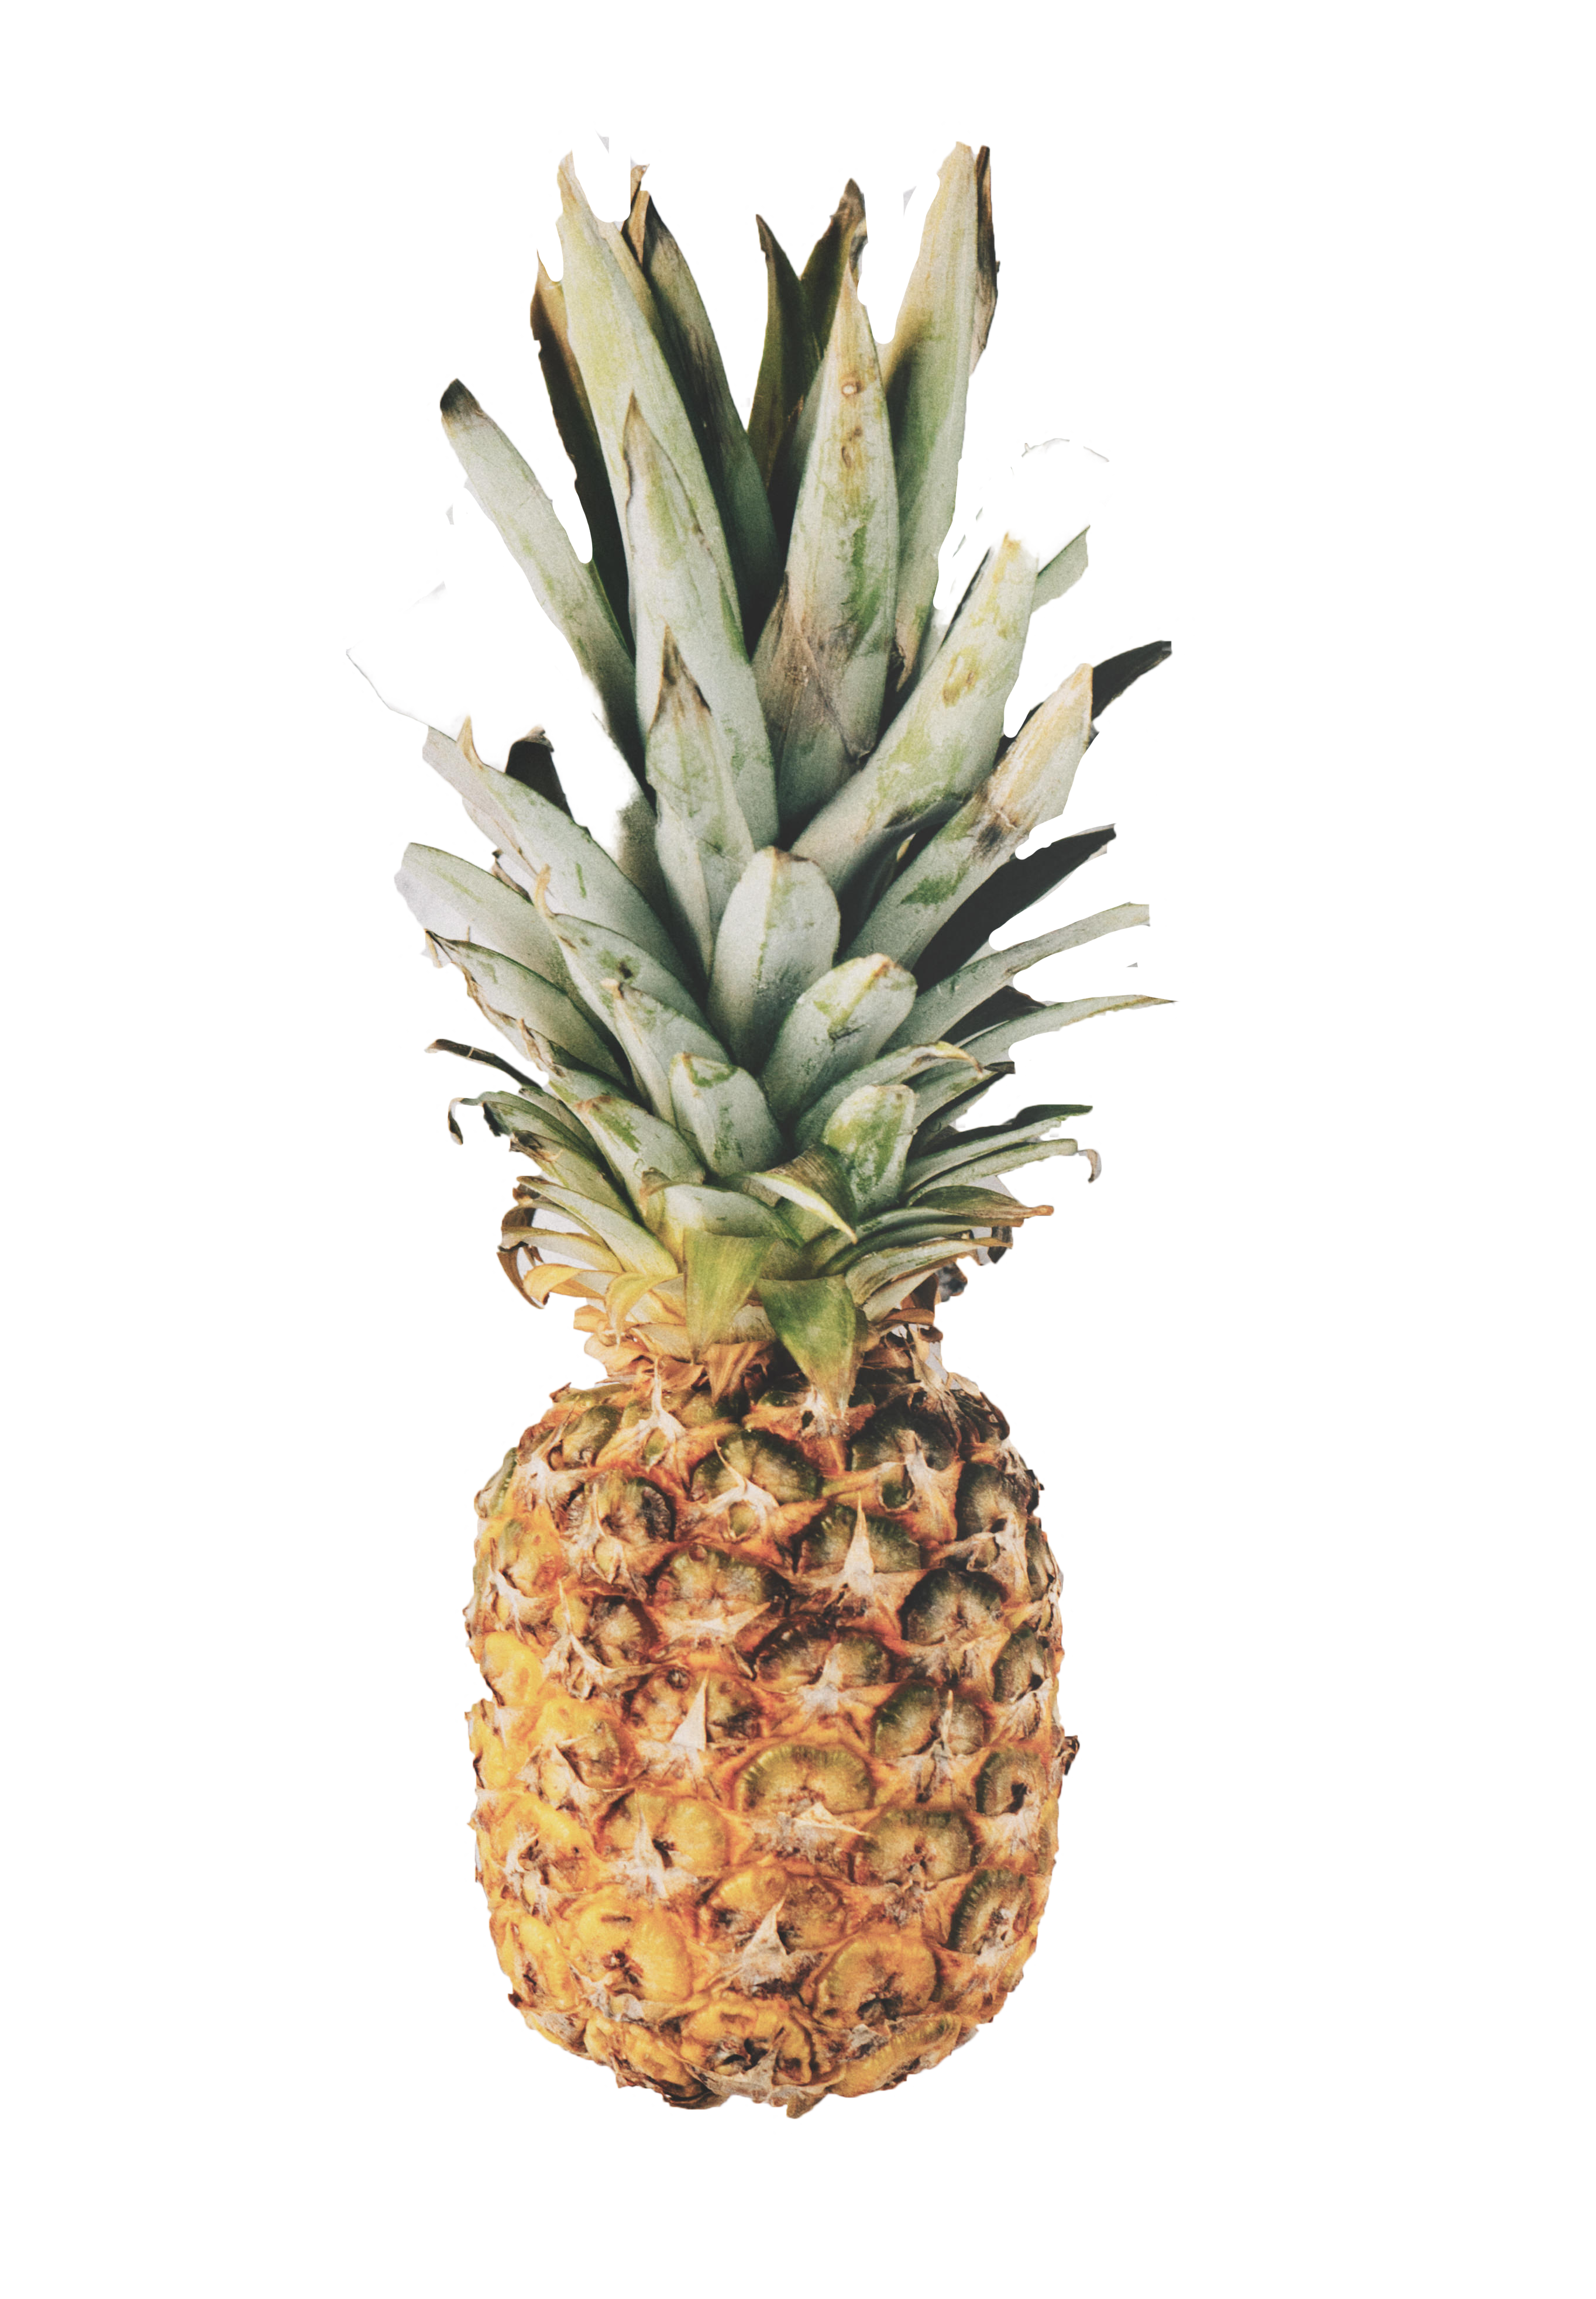 clipart pineapple piece